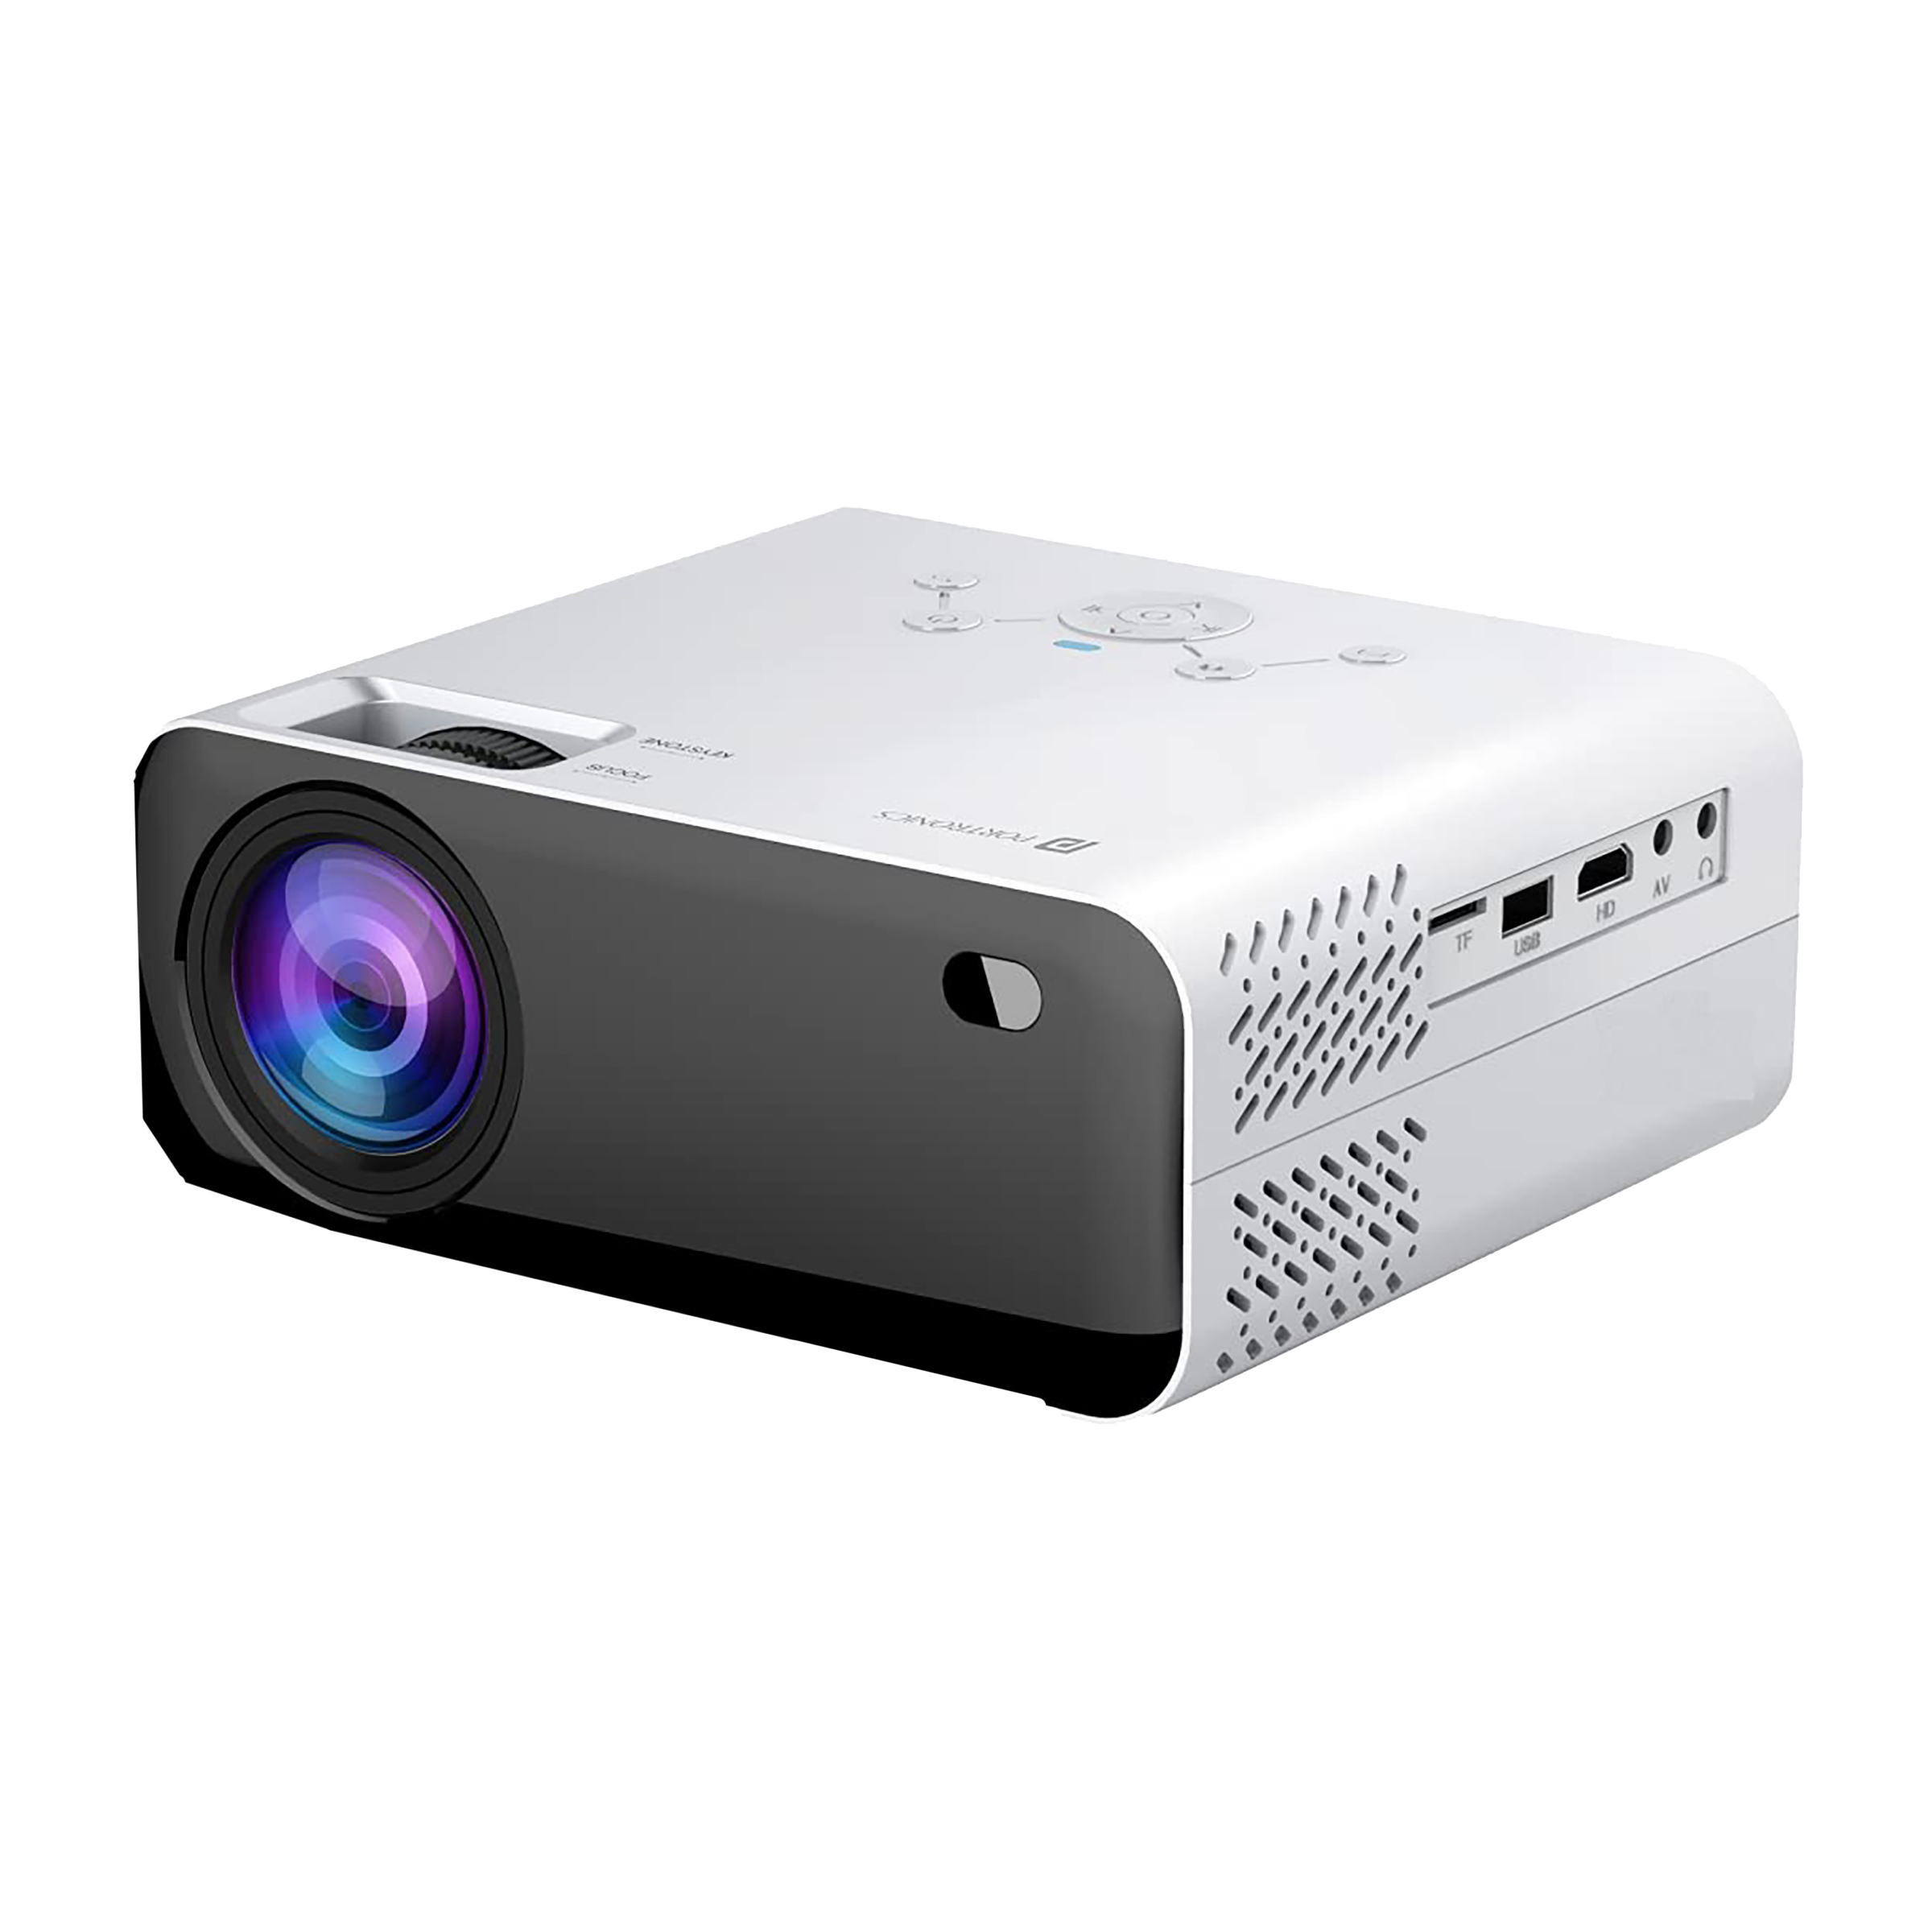 Portronics Beem 200 Plus Multimedia LED Full HD Projector (200 Lumens, WiFi + HDMI + VGA + USB + SD, Android/iOS Mirroring, POR-283, Black/White)_1